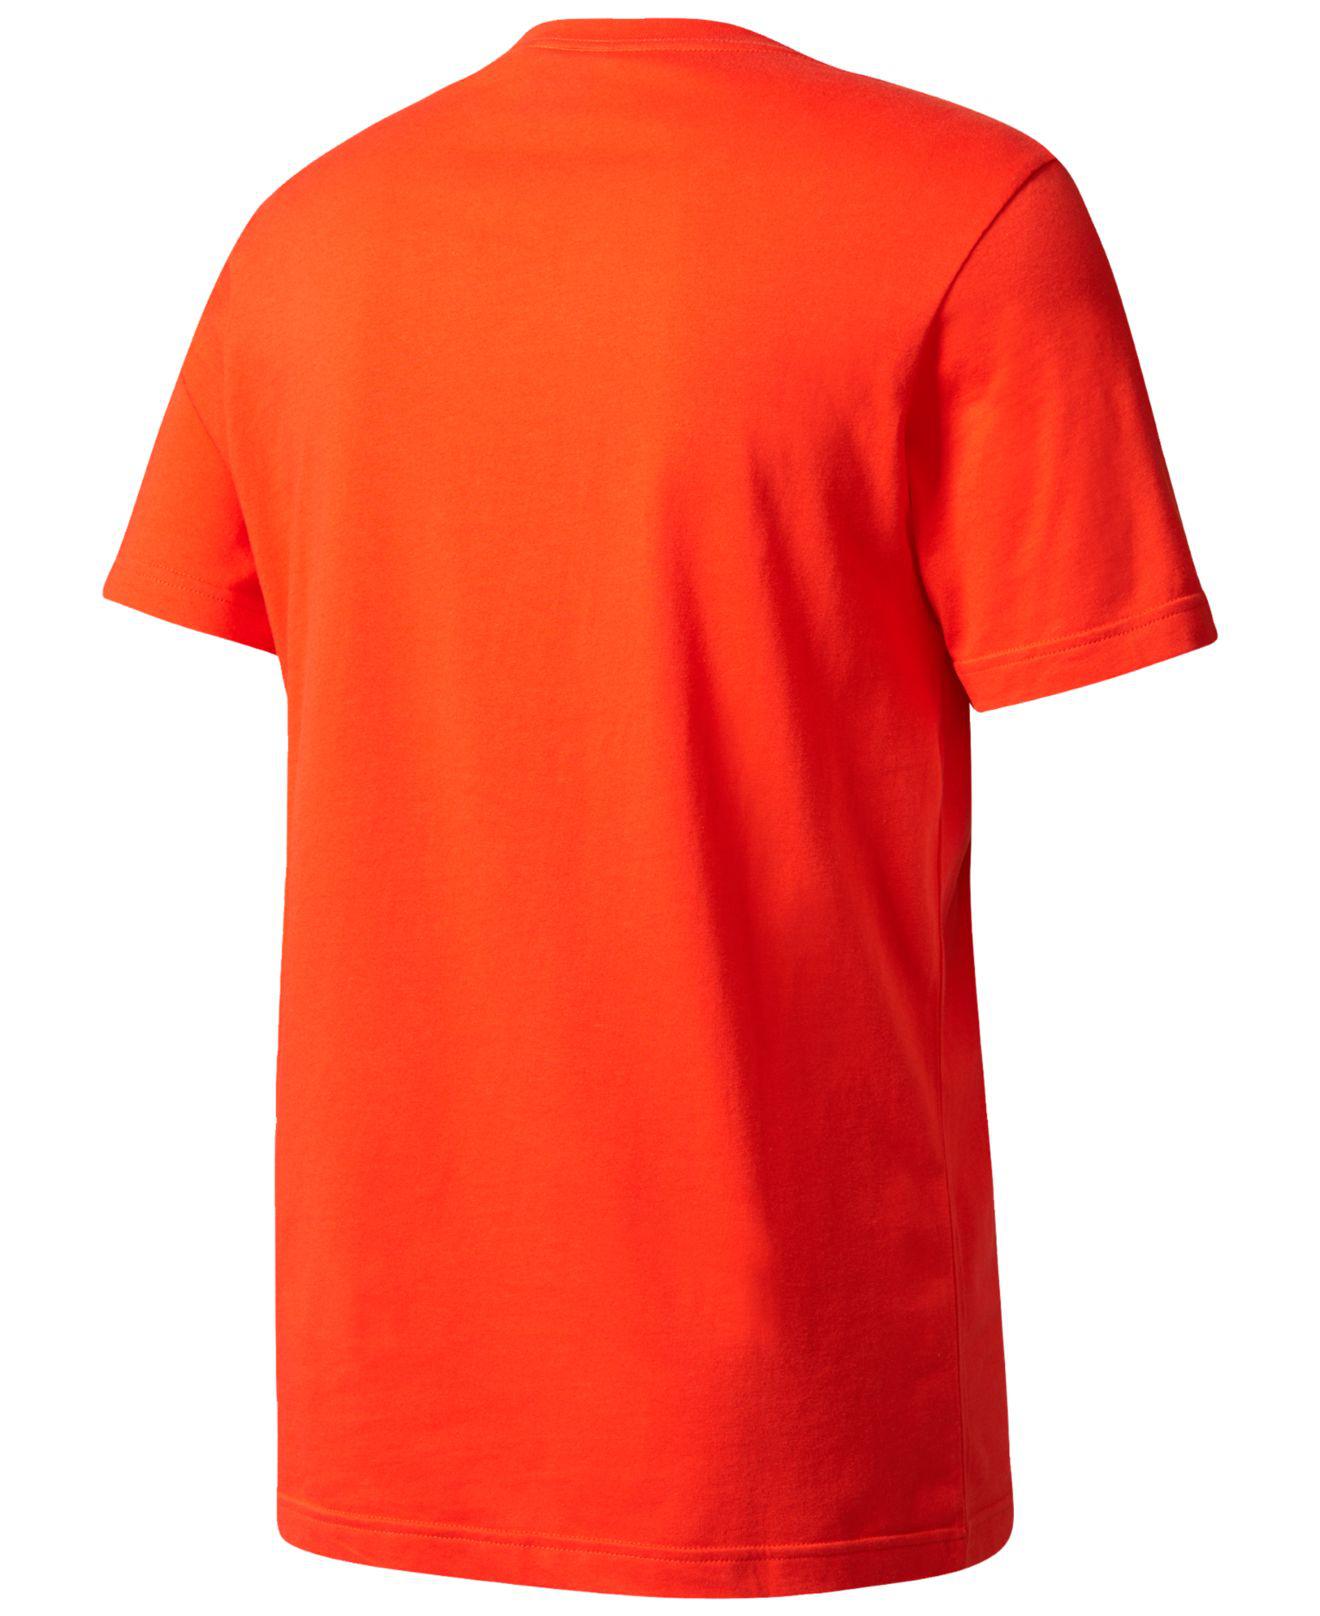 Lyst - Adidas Originals Originals Trefoil T-shirt in Red for Men